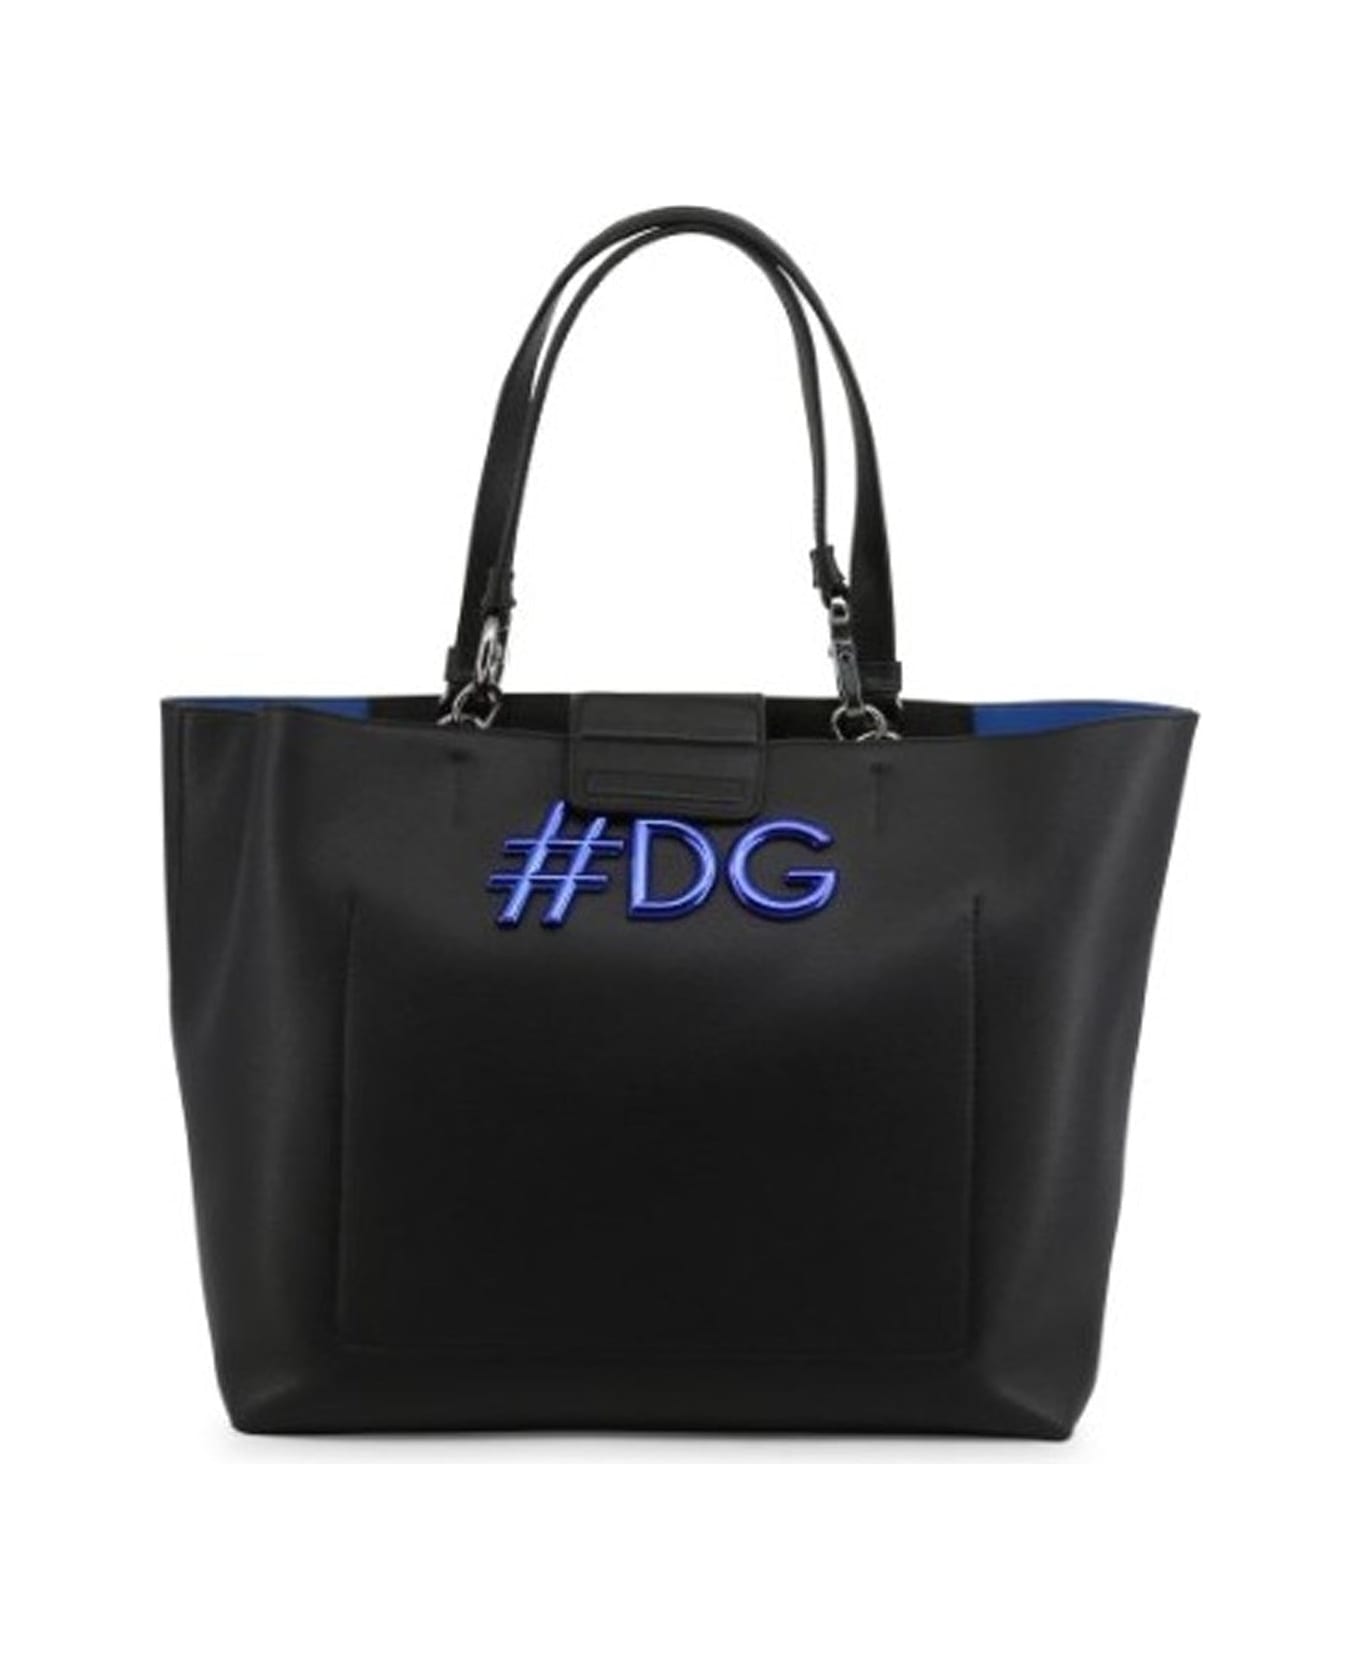 Dolce & Gabbana Leather Tote Bag - Black